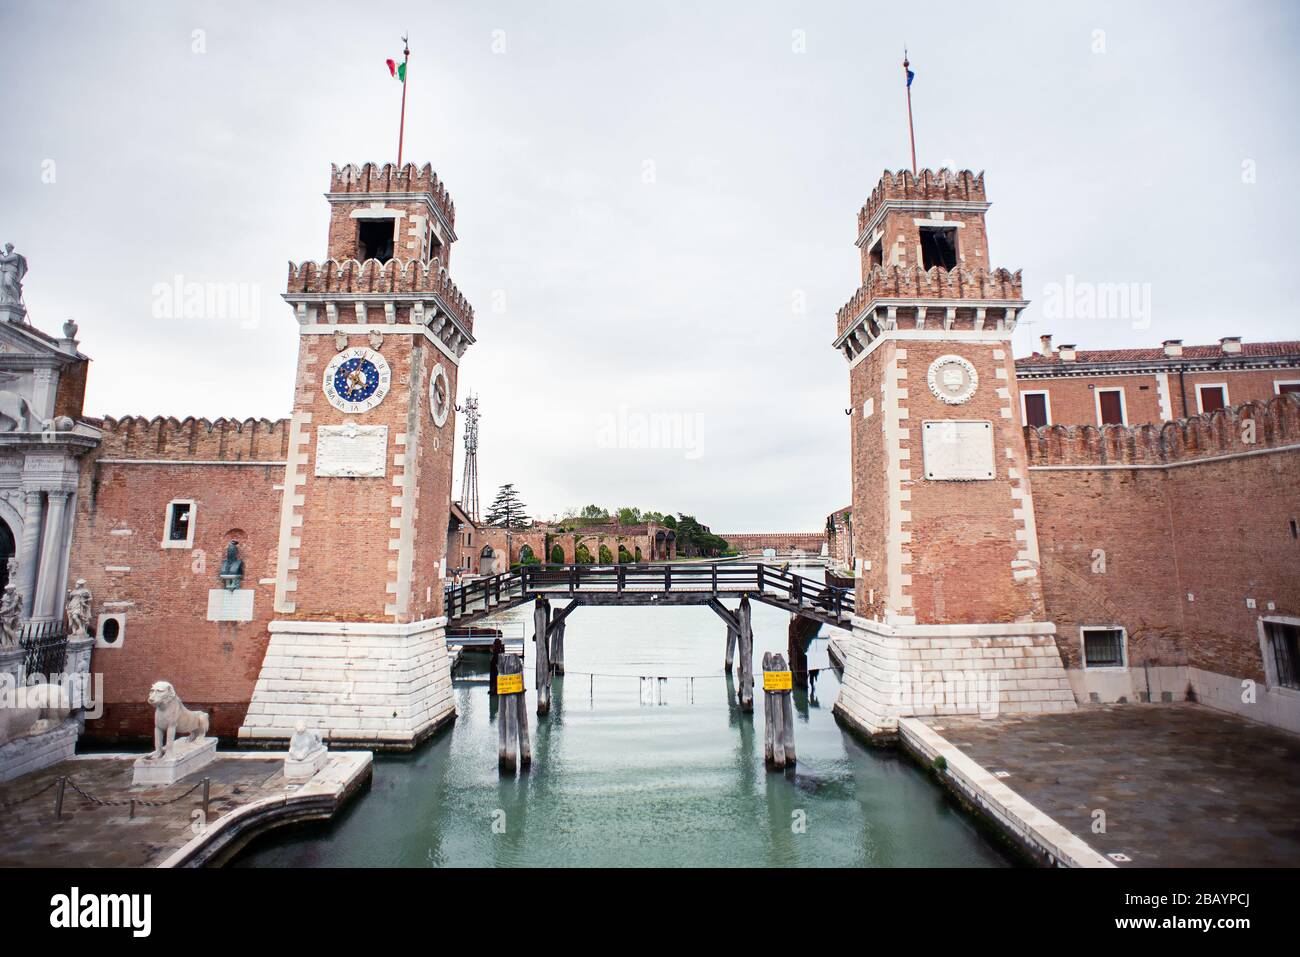 Venice. Italy - May 13, 2019: The Main Gate at the Venetian Arsenal (Arsenale di Venezia). View from Ponte del Paradiso. Canal Rio dell Arsenale. Stock Photo